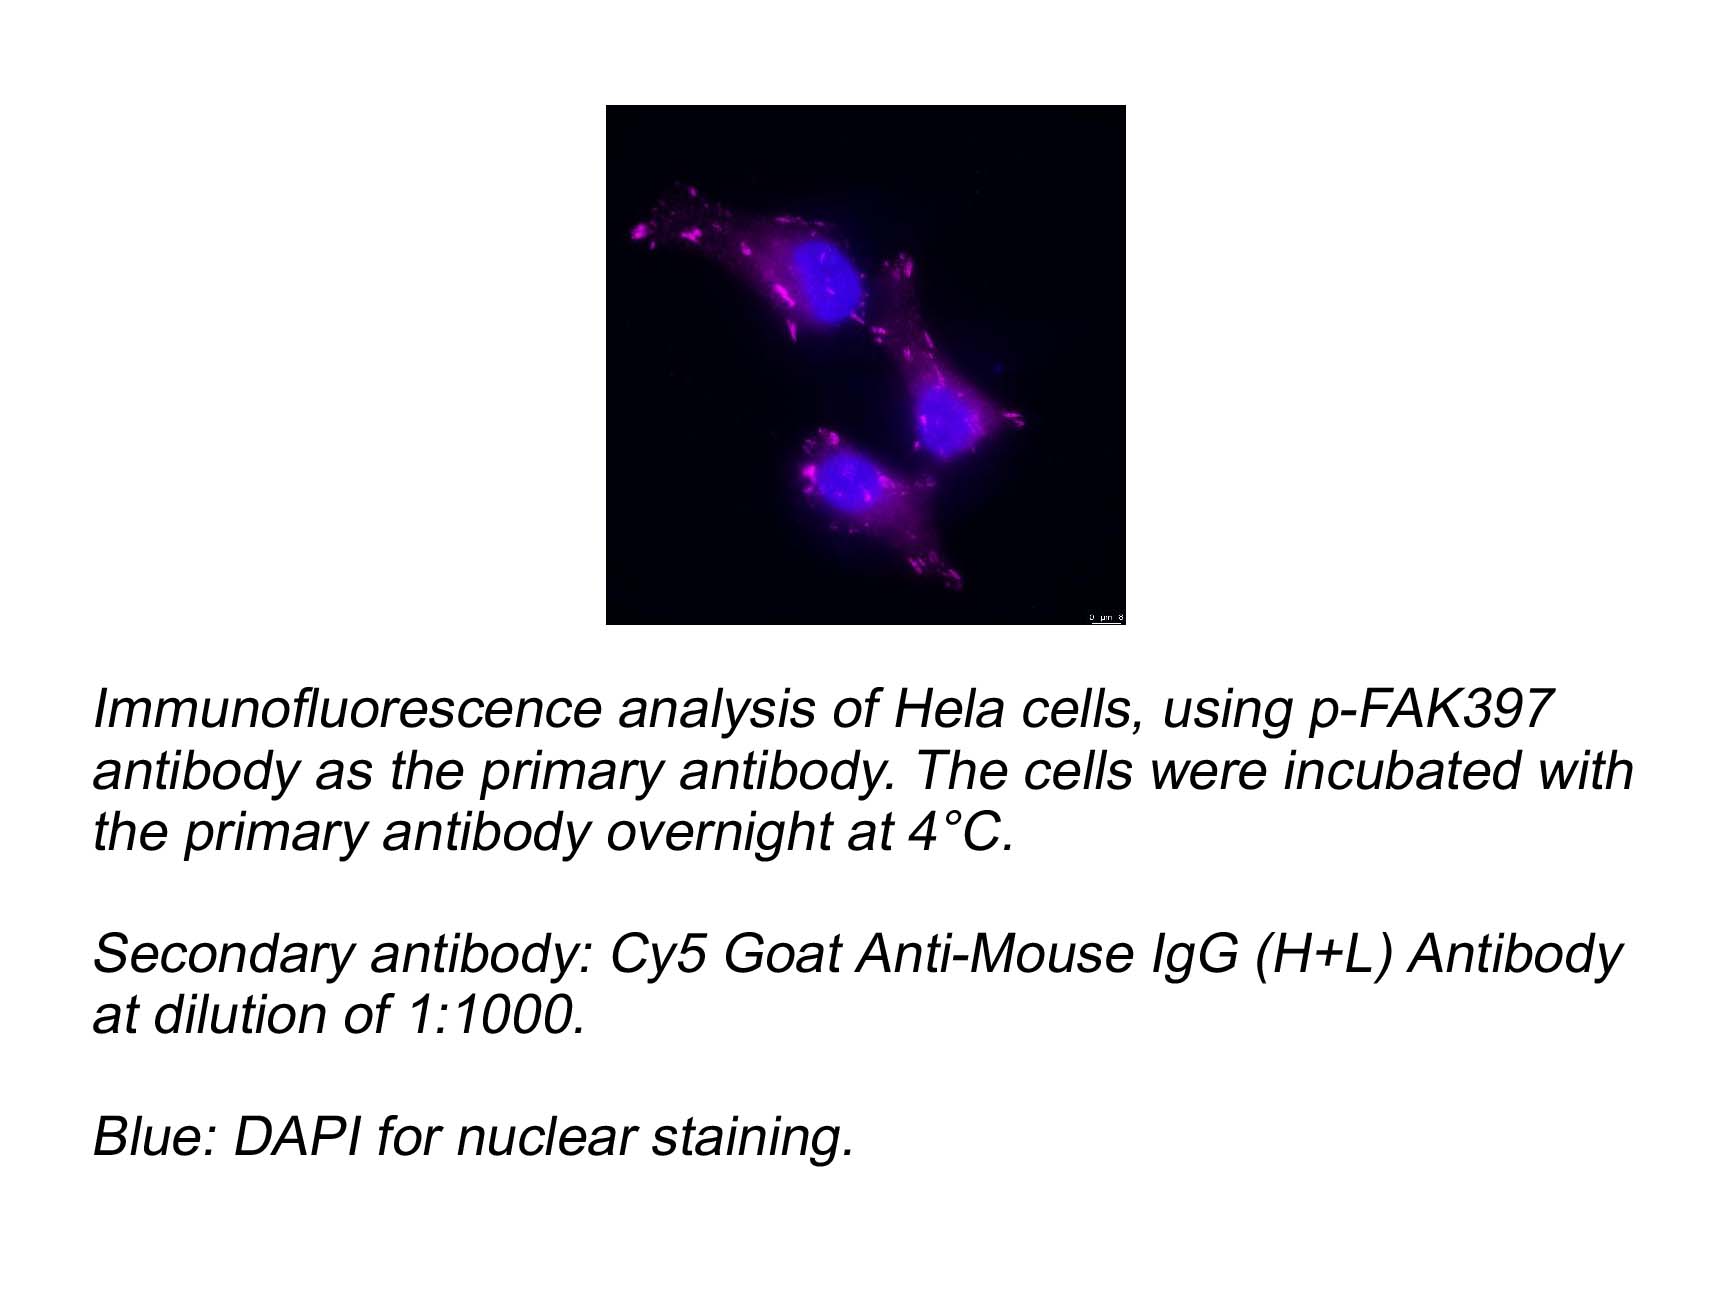 Cy5 Goat Anti-Mouse IgG (H+L) Antibody